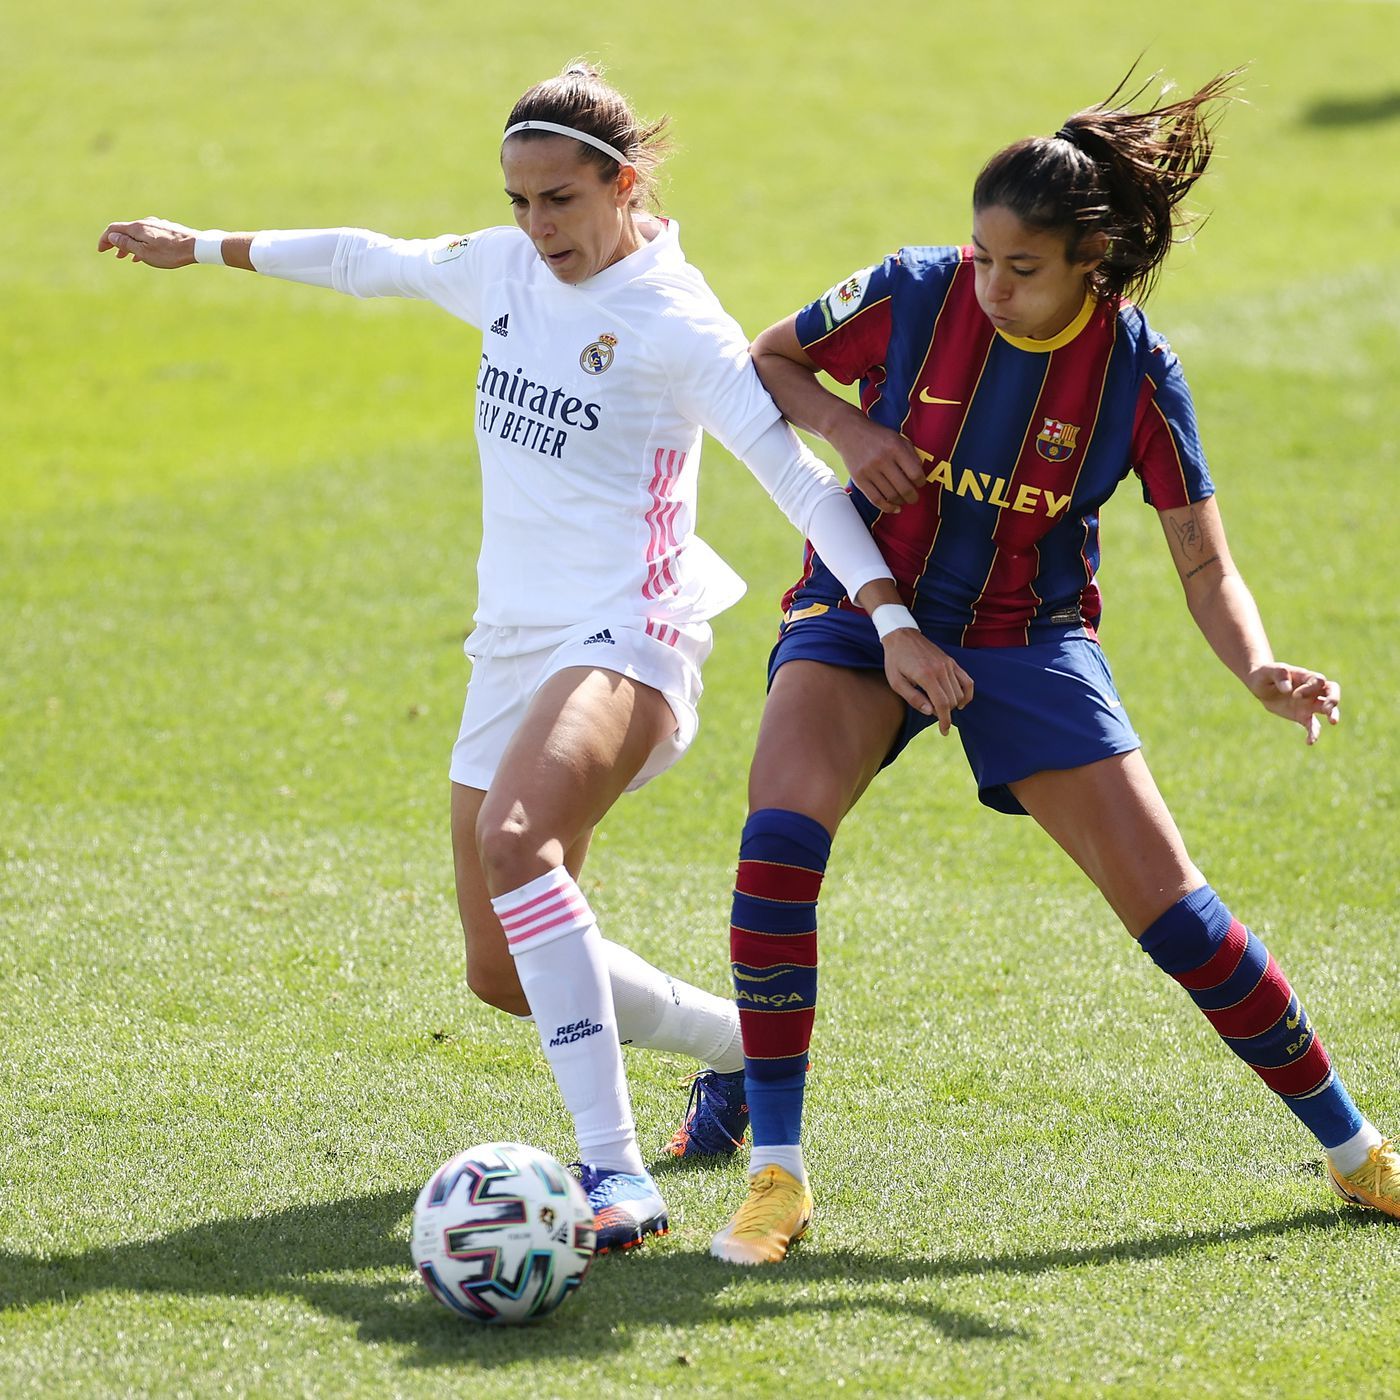 Real Madrid Femenino vs. FC Barcelona Femení: Starting Lineups, Time, & How to Watch